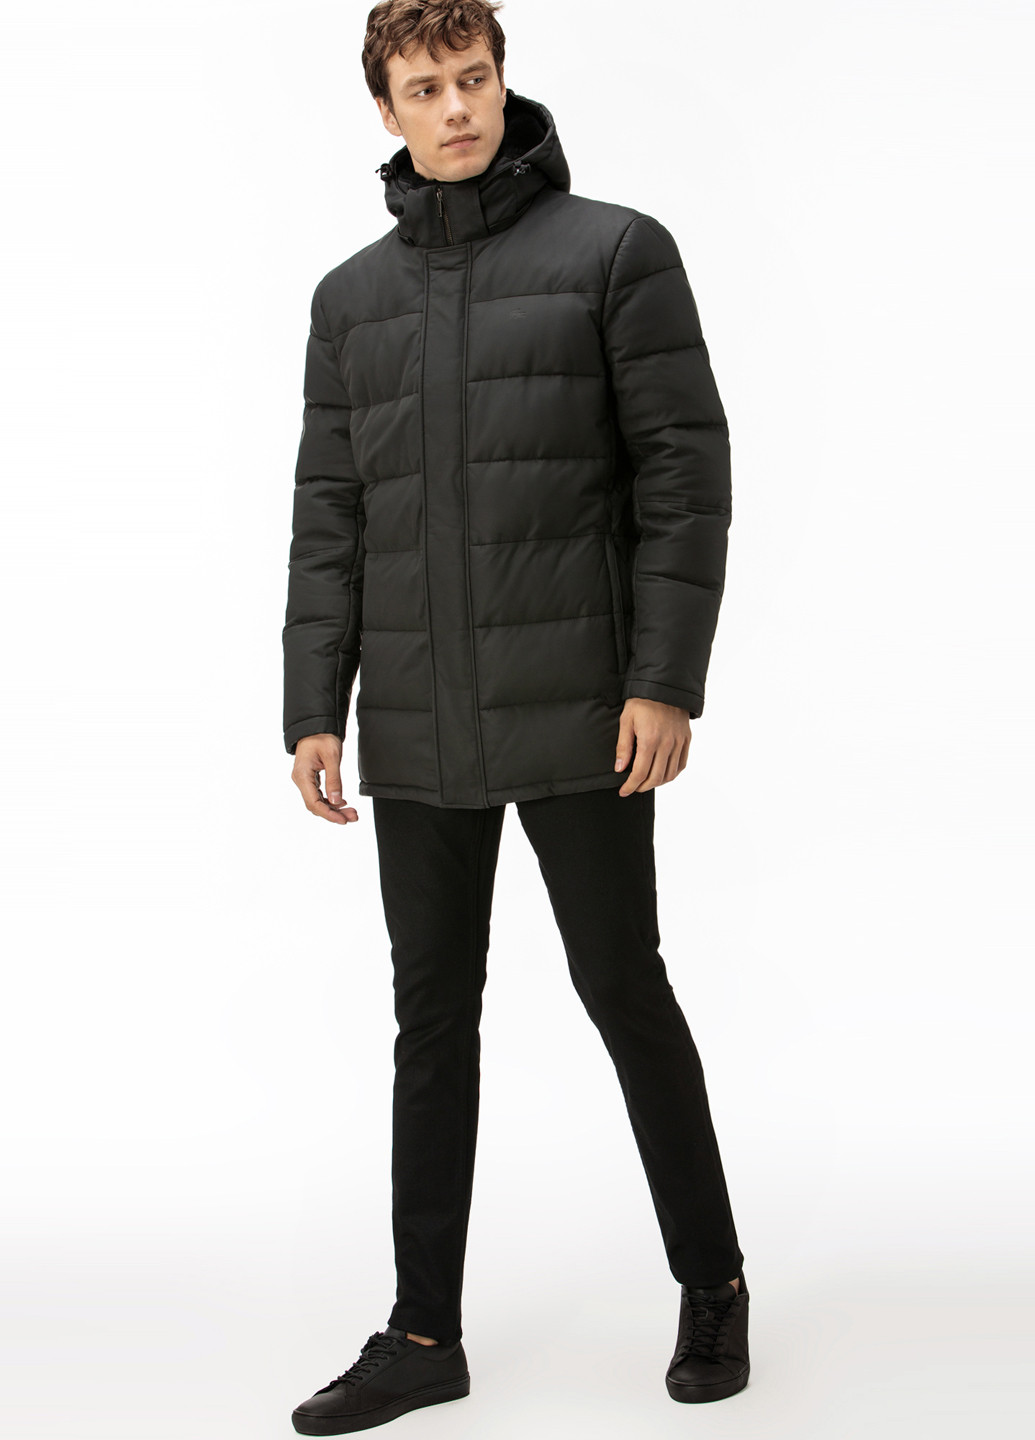 Черная зимняя куртка Lacoste